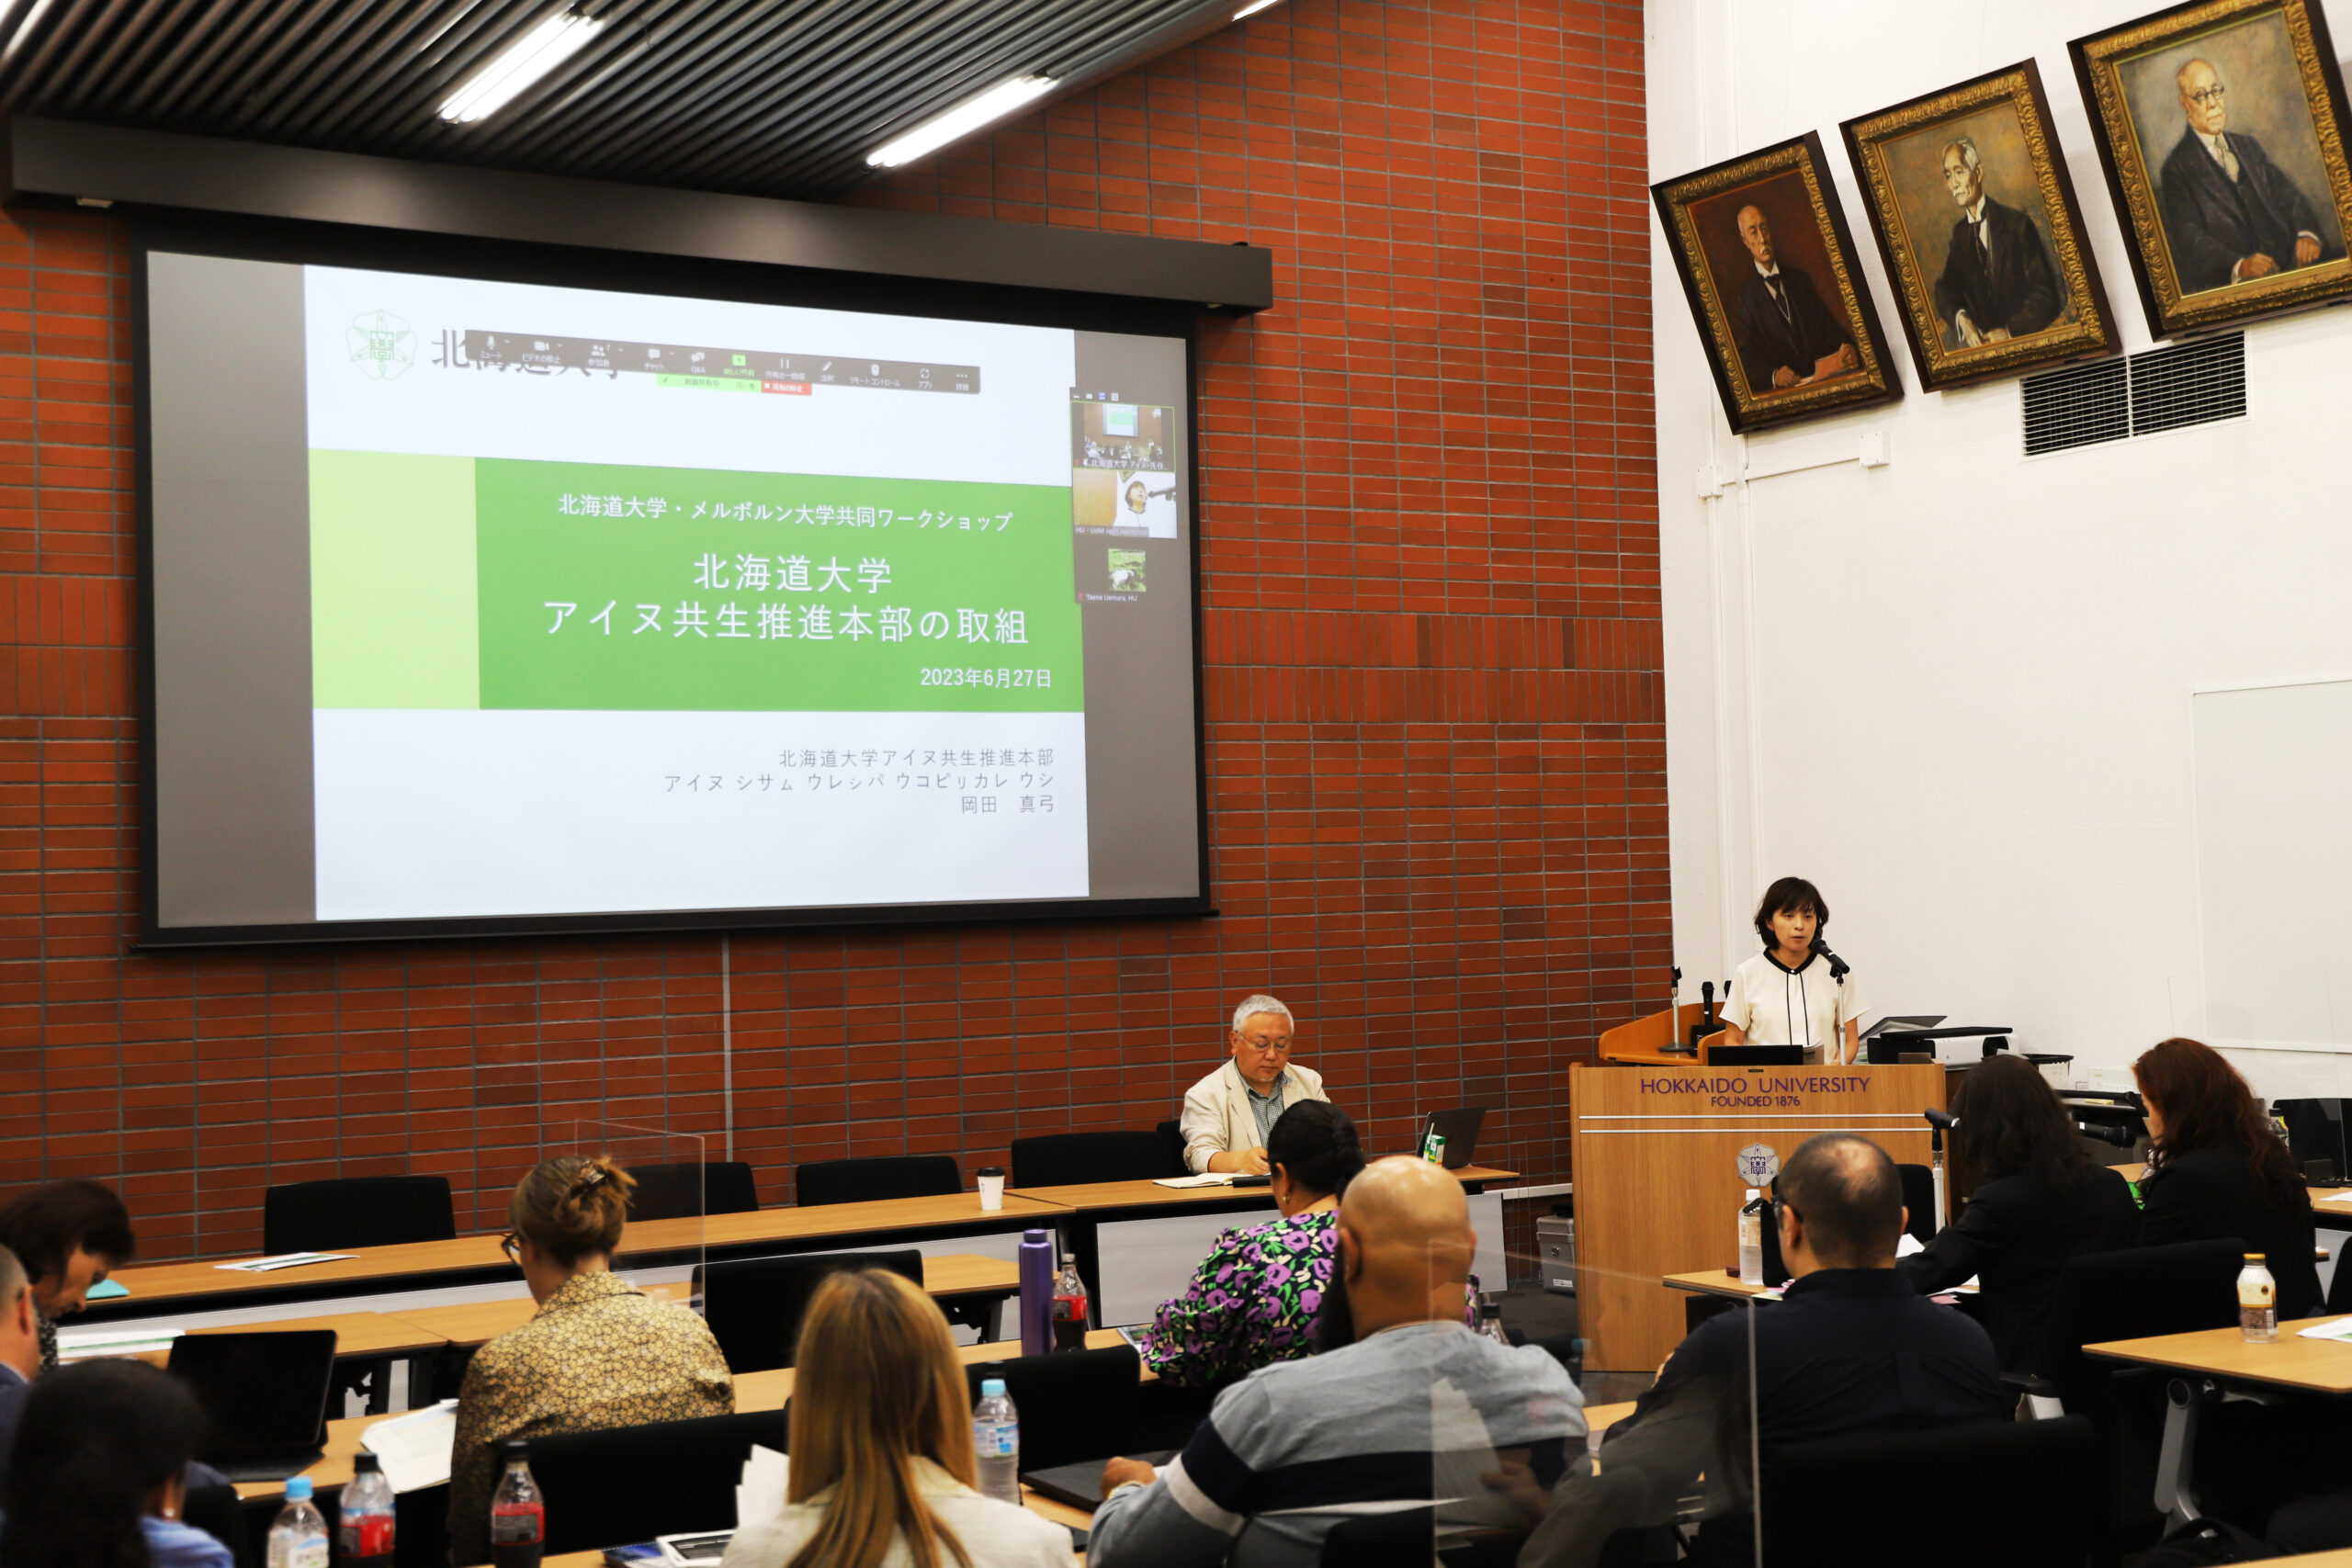 Associate Professor Mayumi Okada, Hokkaido University, introducing the Office of Ainu Relations and Initiatives.